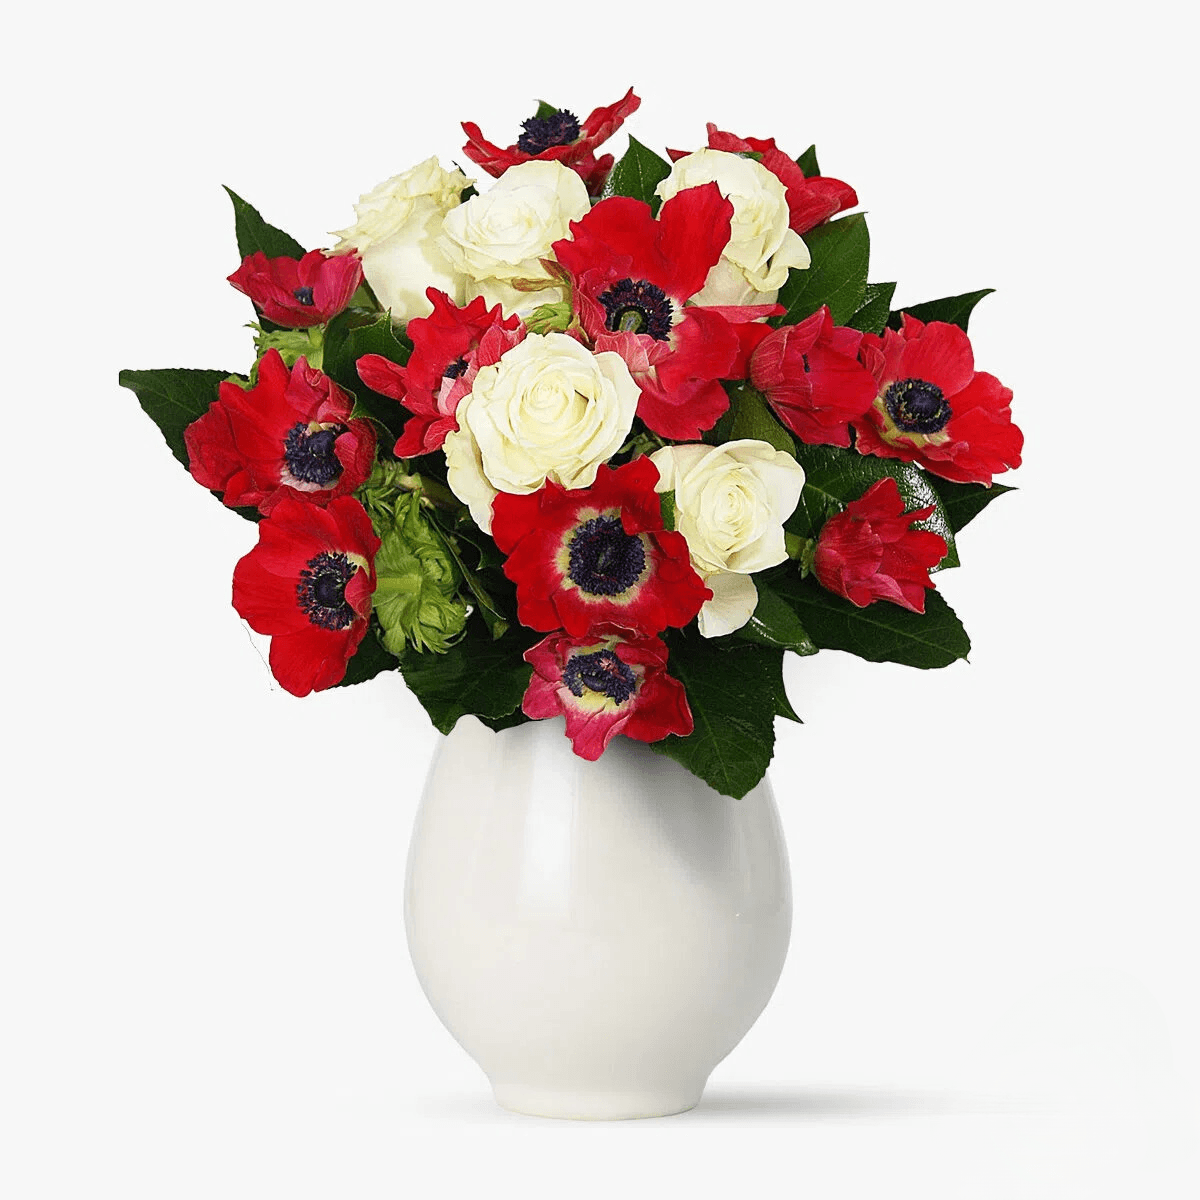 Buchet de anemone rosii si trandafiri albi – premium albi